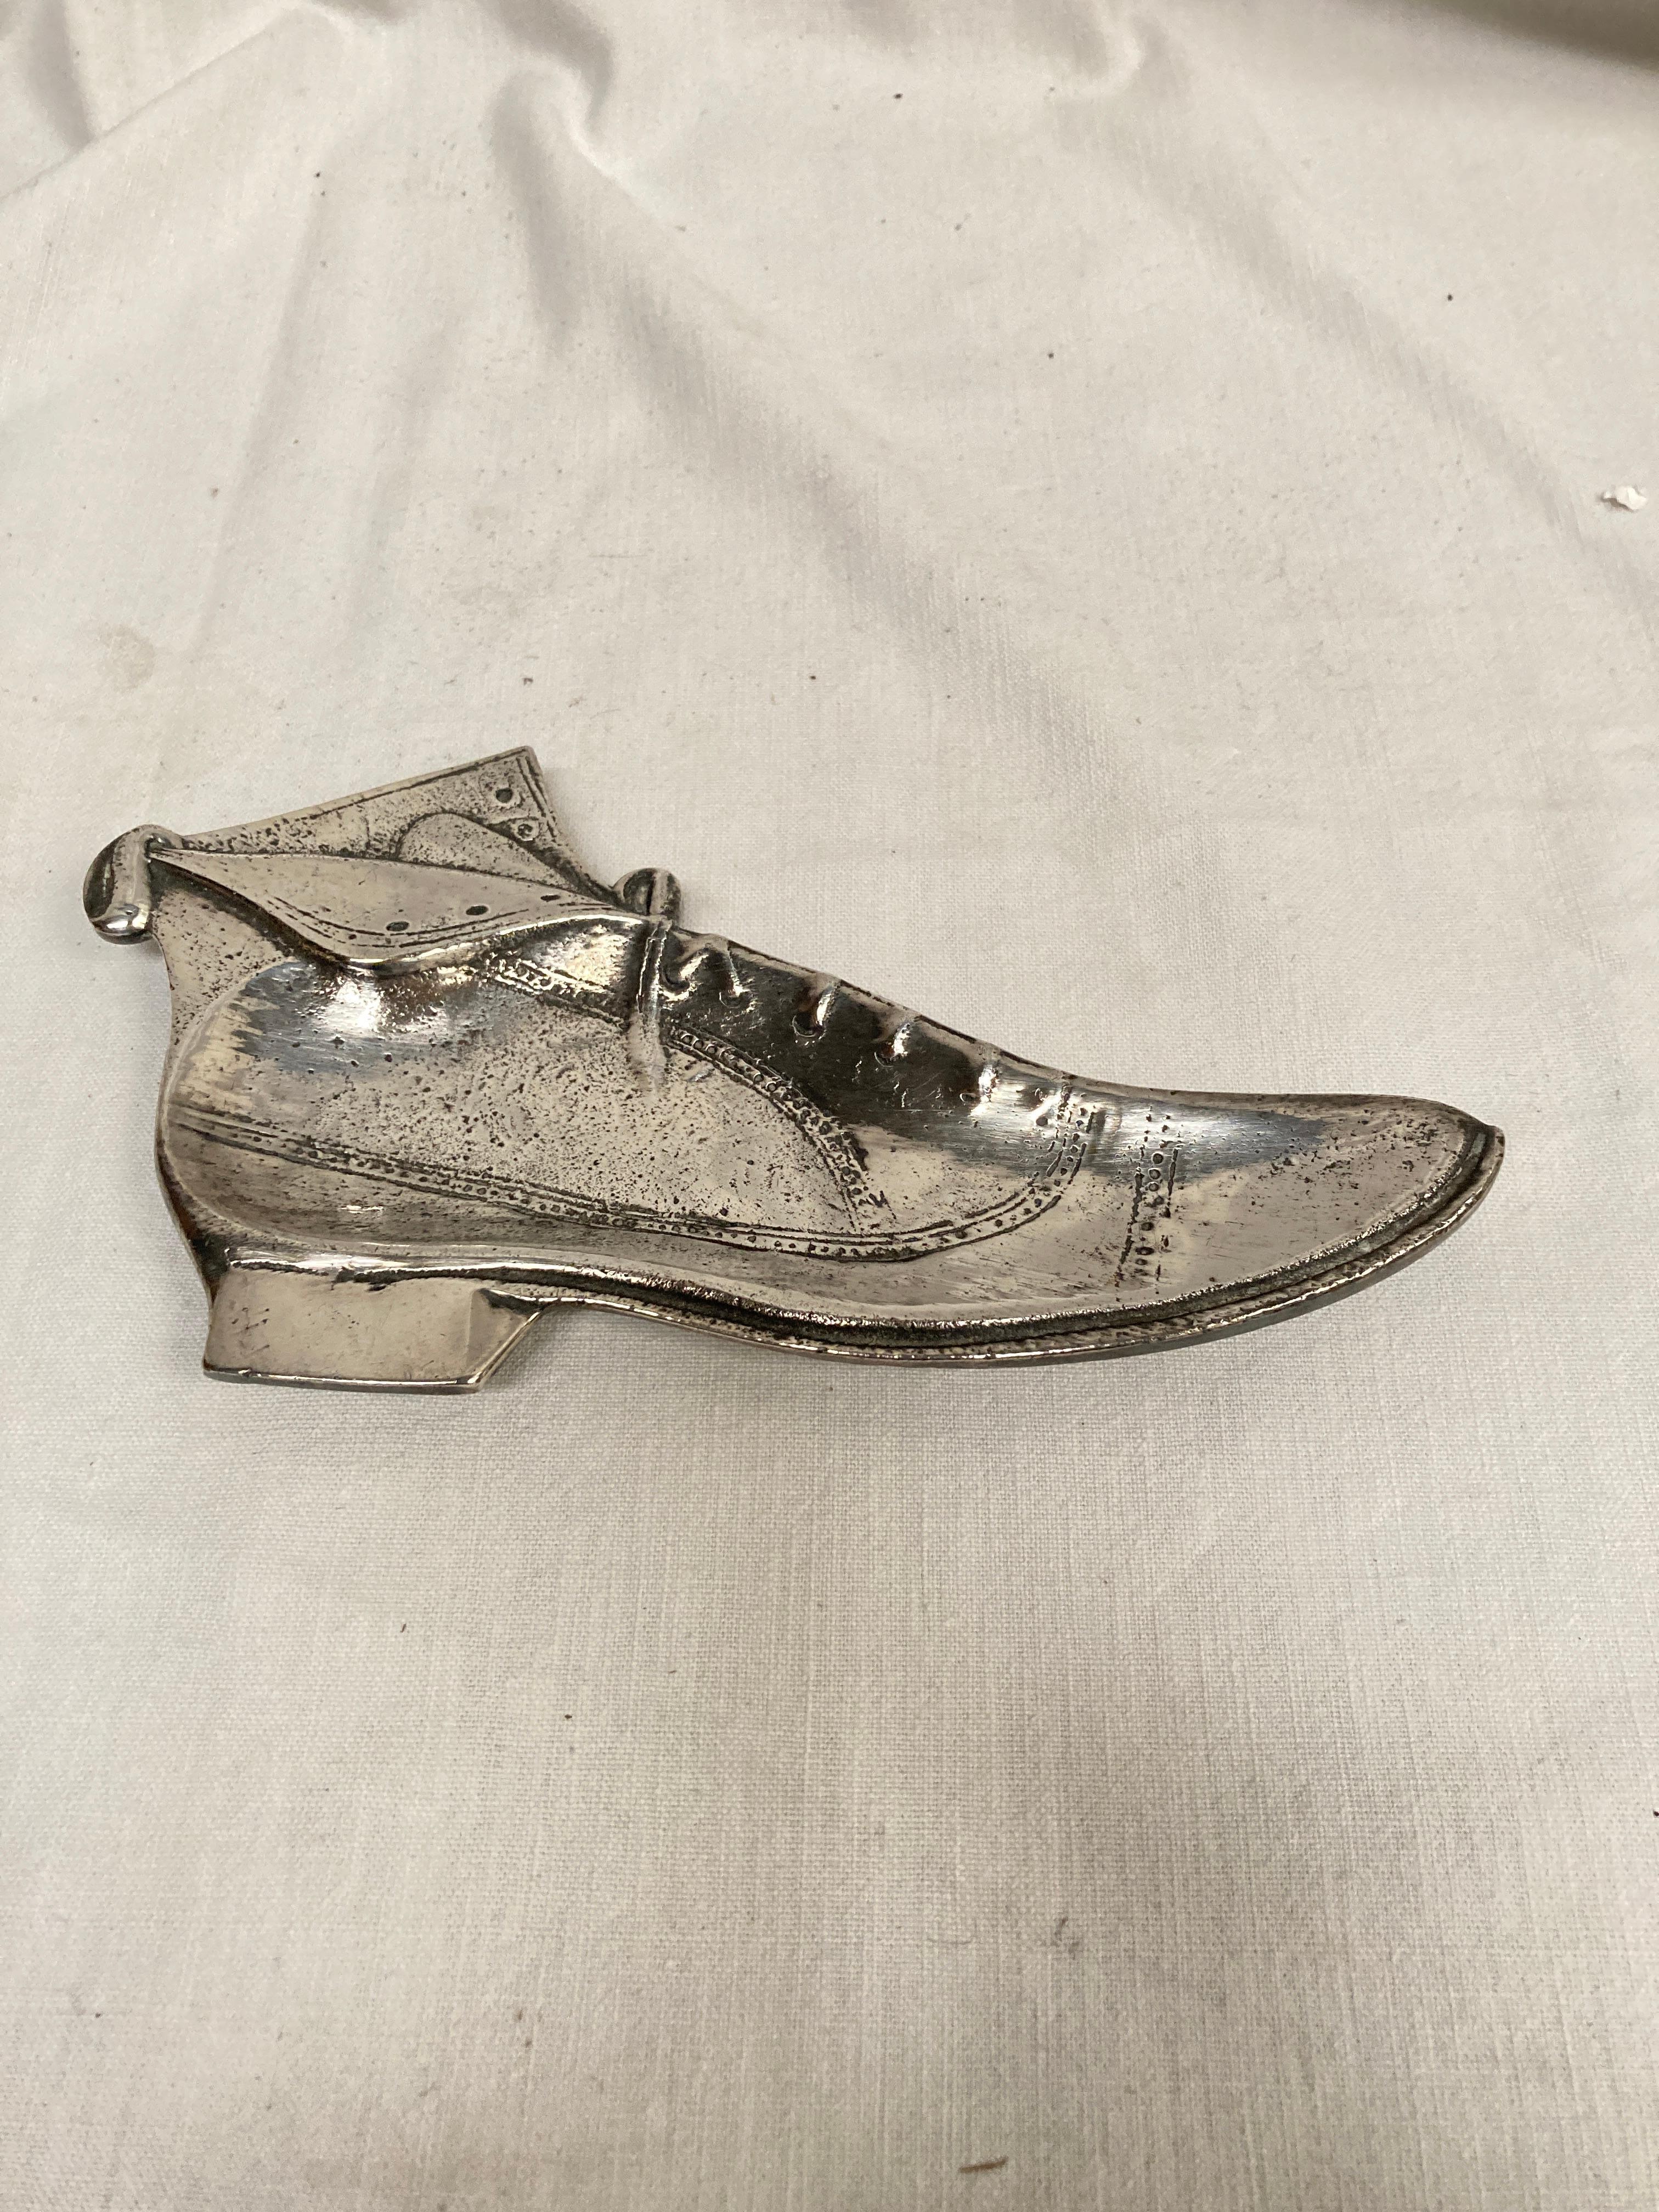 Unusual bronze vide poche showing a shoe
France
1960's